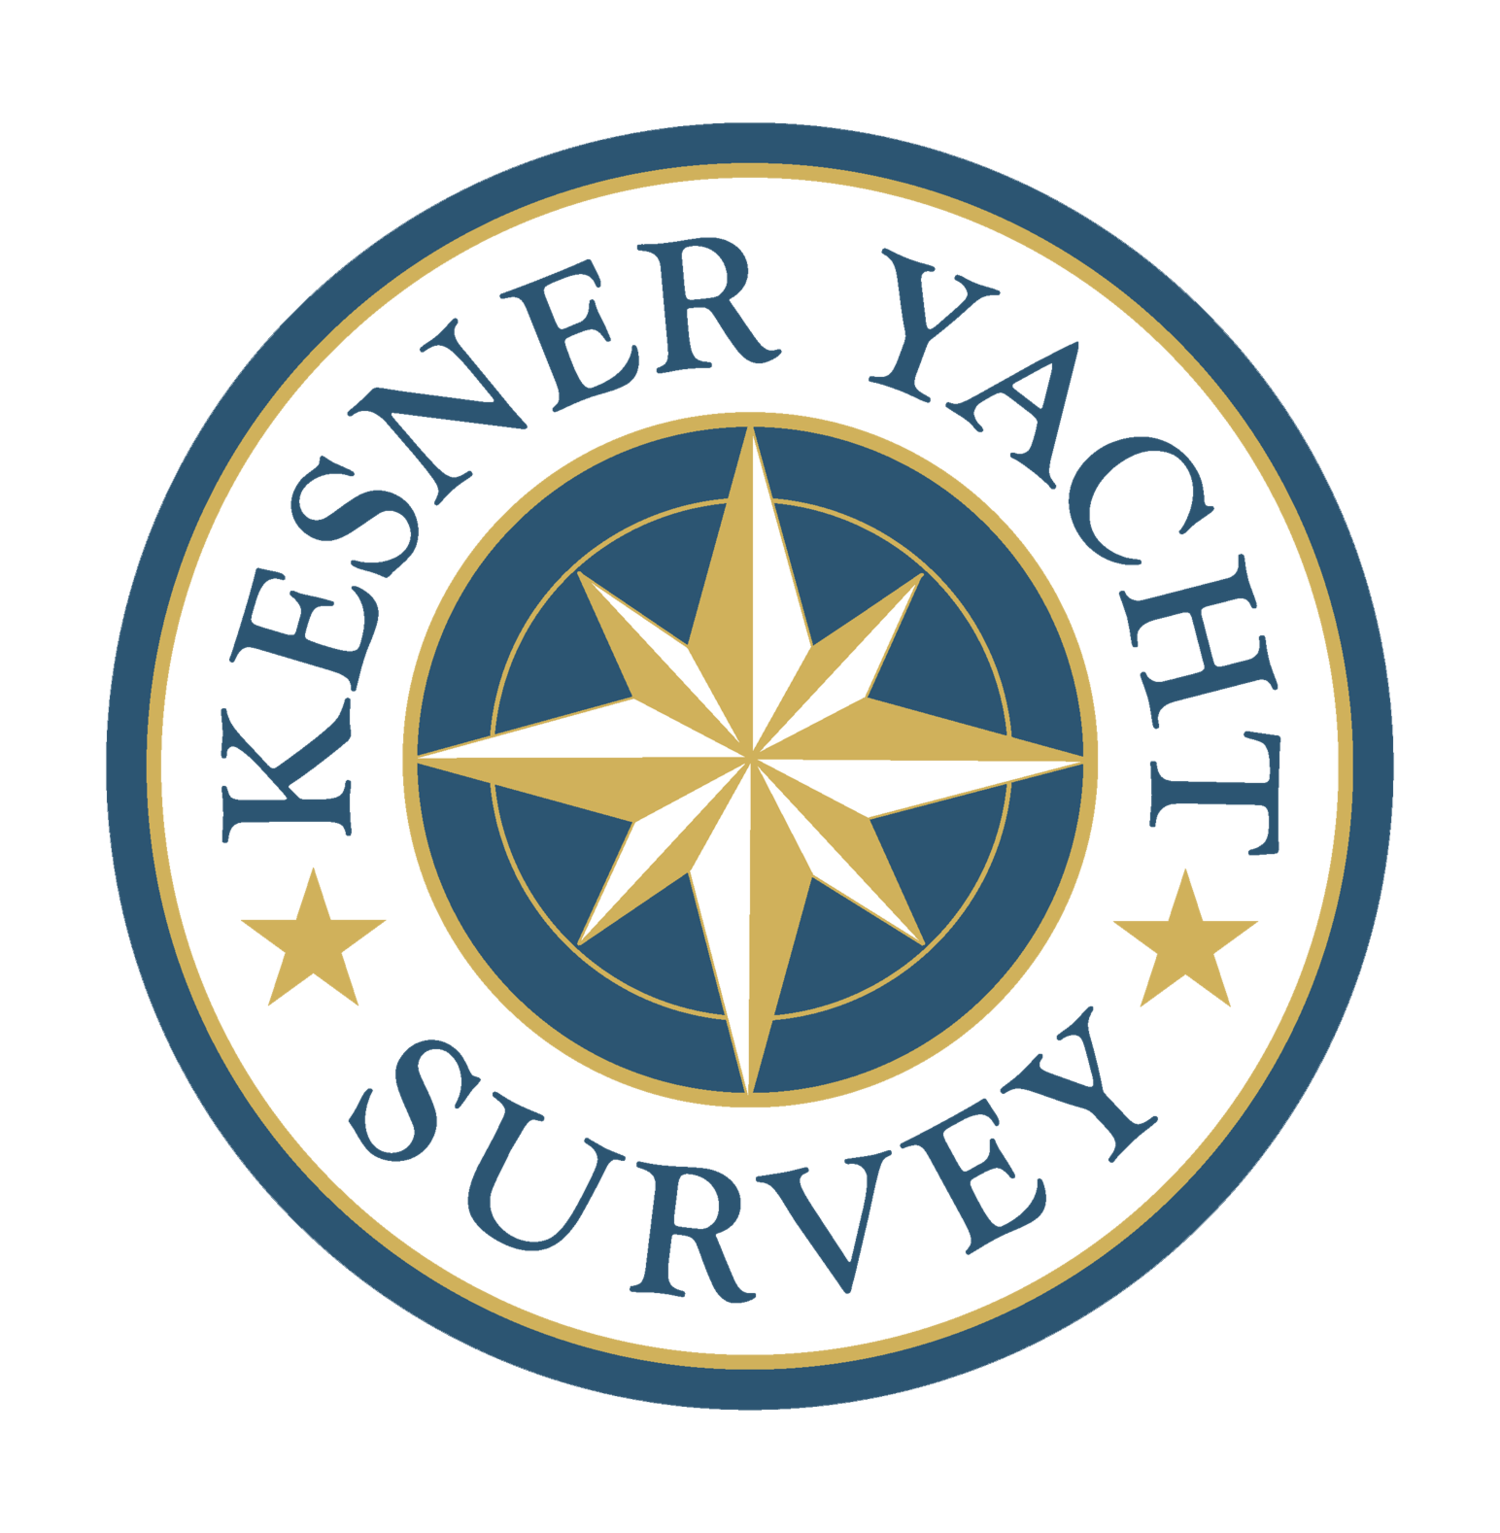 Kesner Yacht Survey, Serving East Coast of the United States